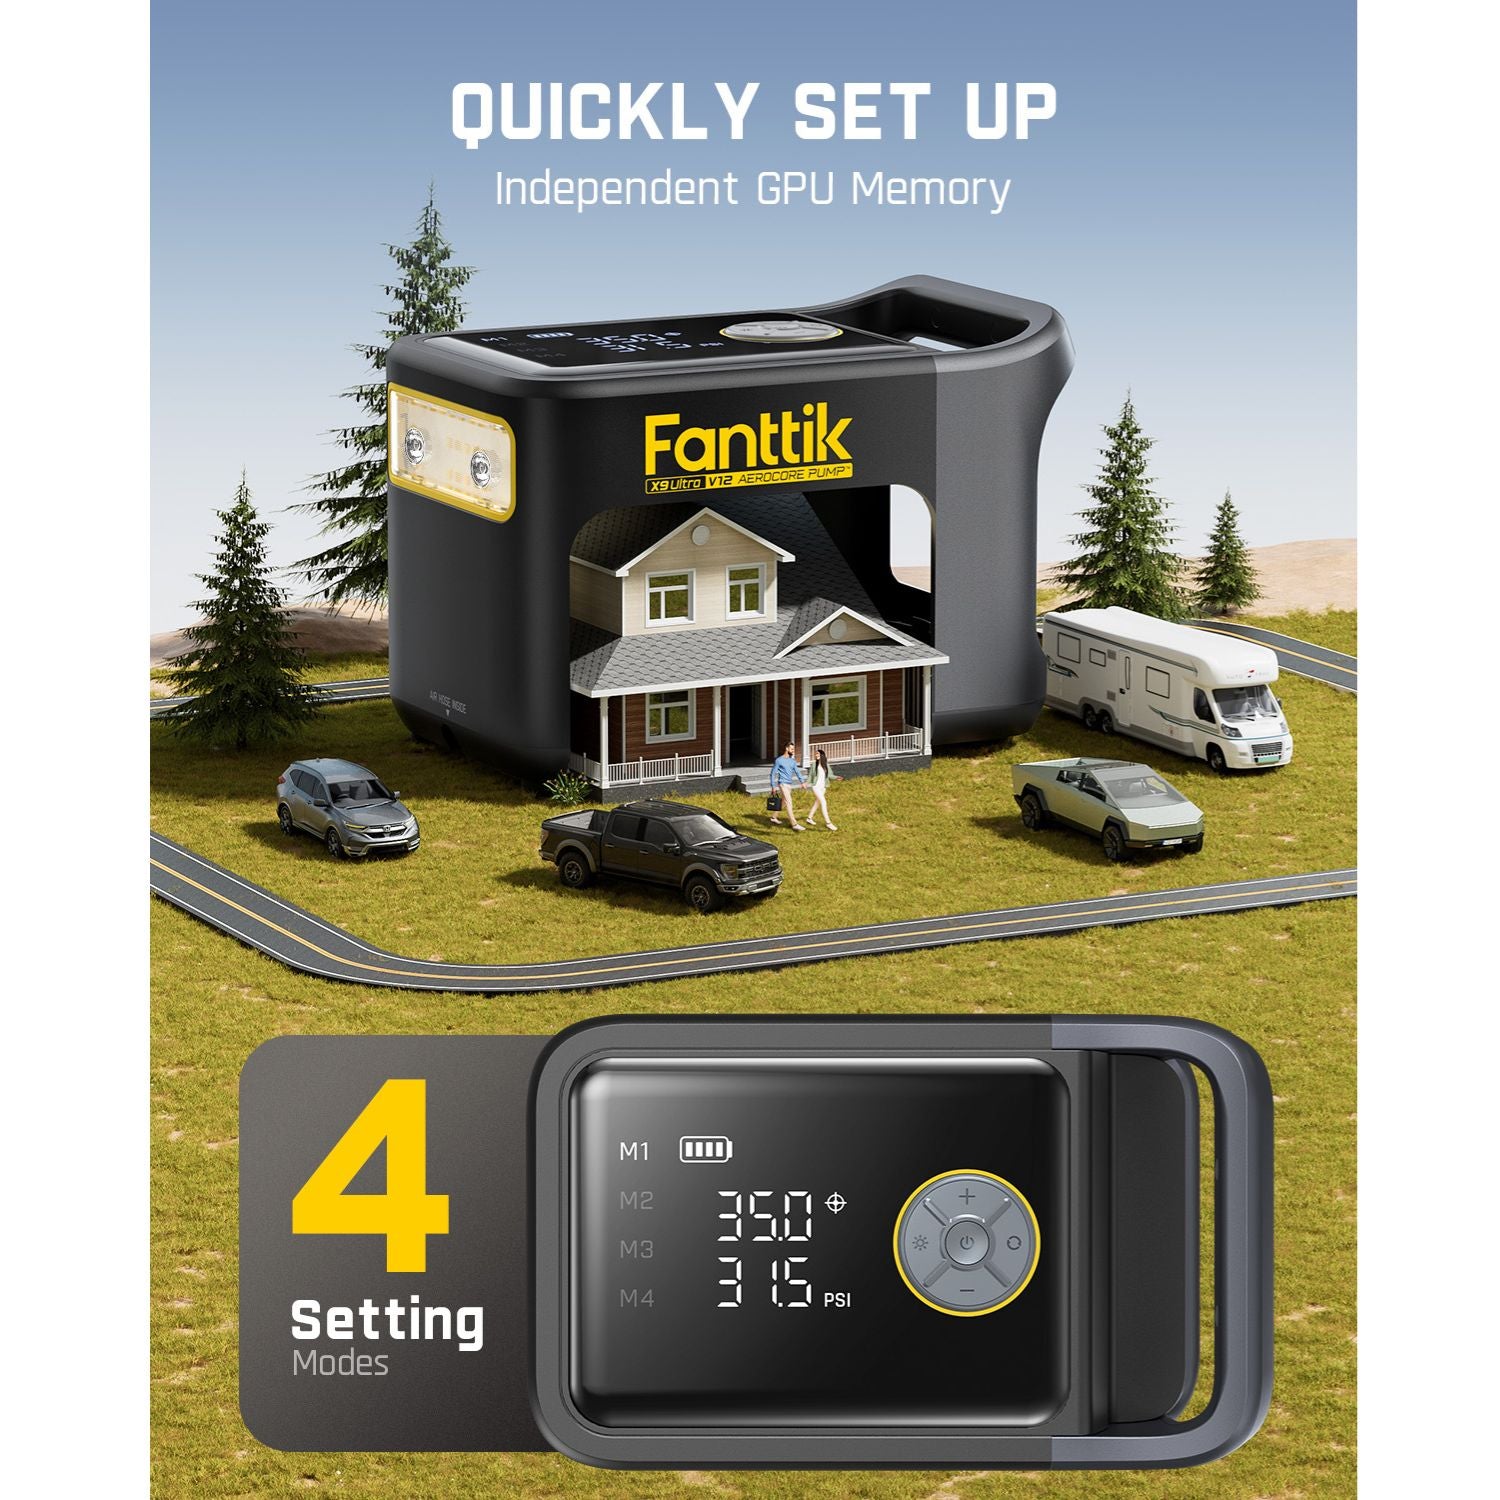 Fanttik X9 Ultra™ Tire Inflator and V10 Apex Foldable Car Vacuum